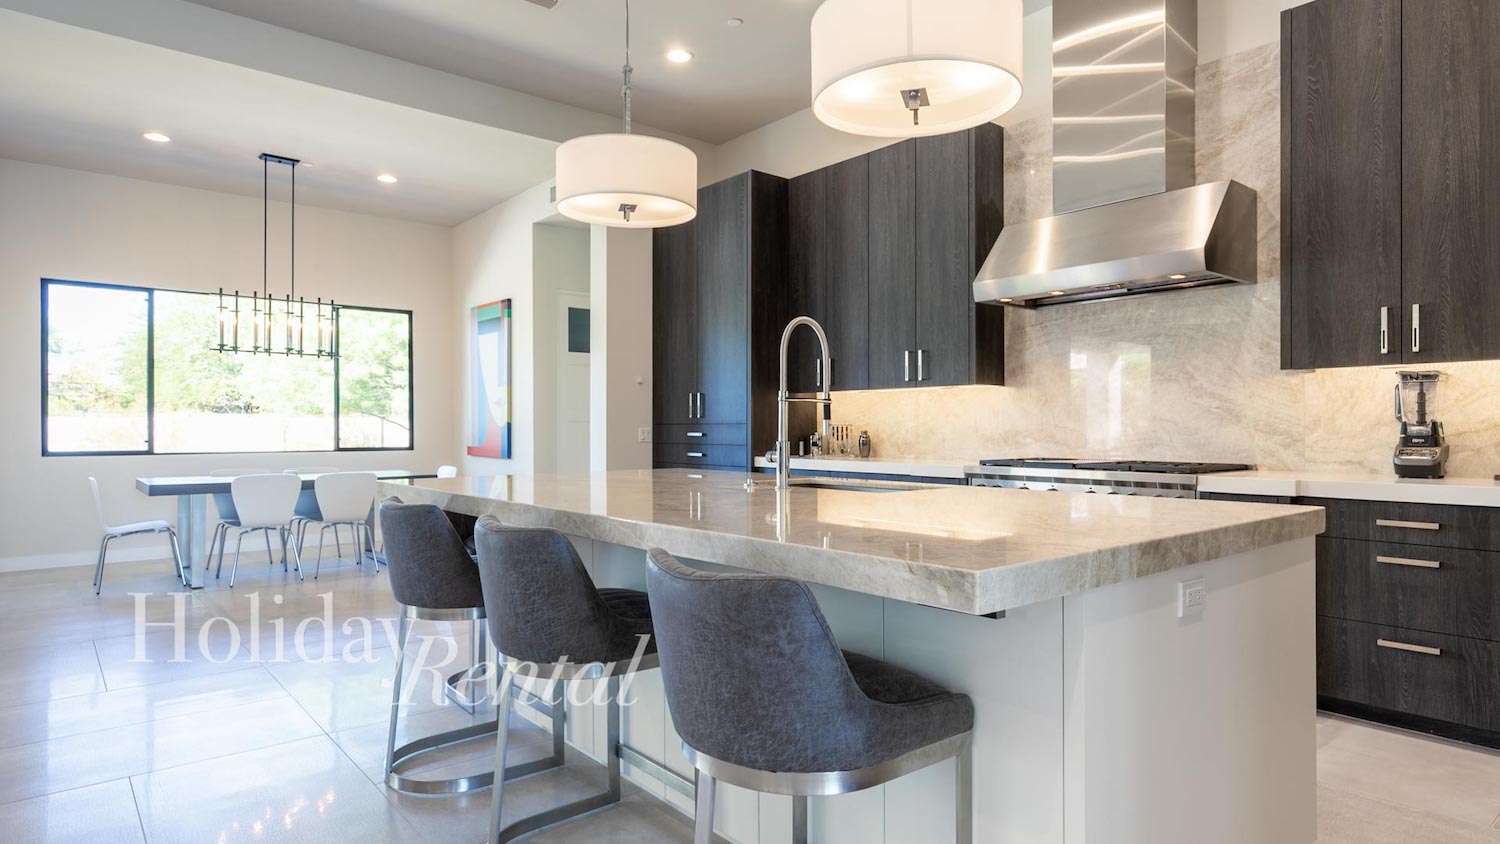 modern and sleek kitchen luxury vacation home